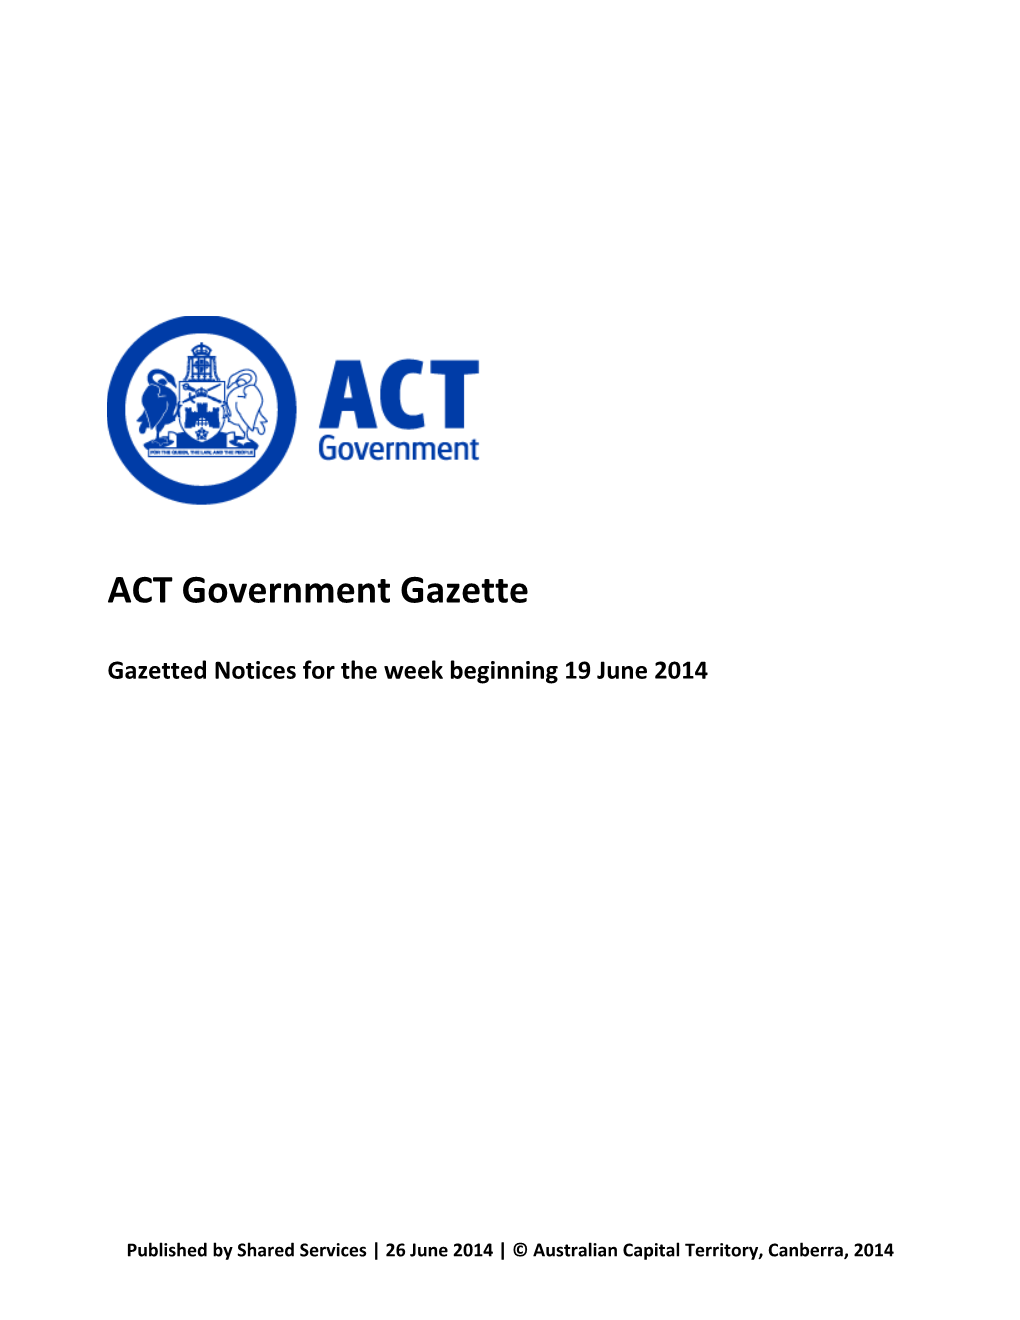 ACT Government Gazette 26 Jun 2014